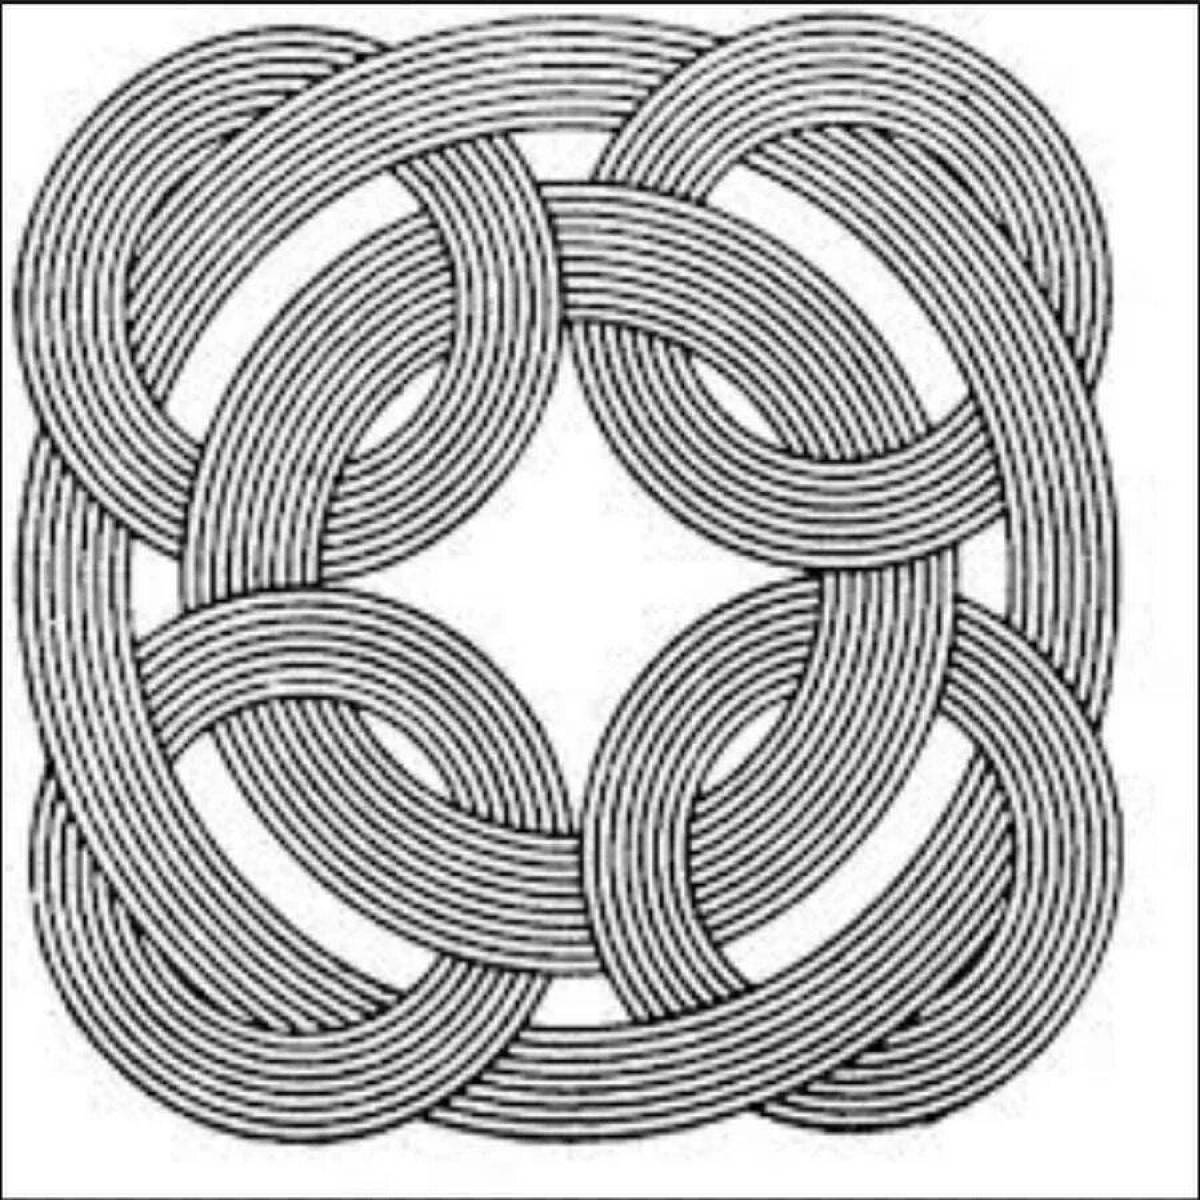 Coloring book spellbinding circle spiral